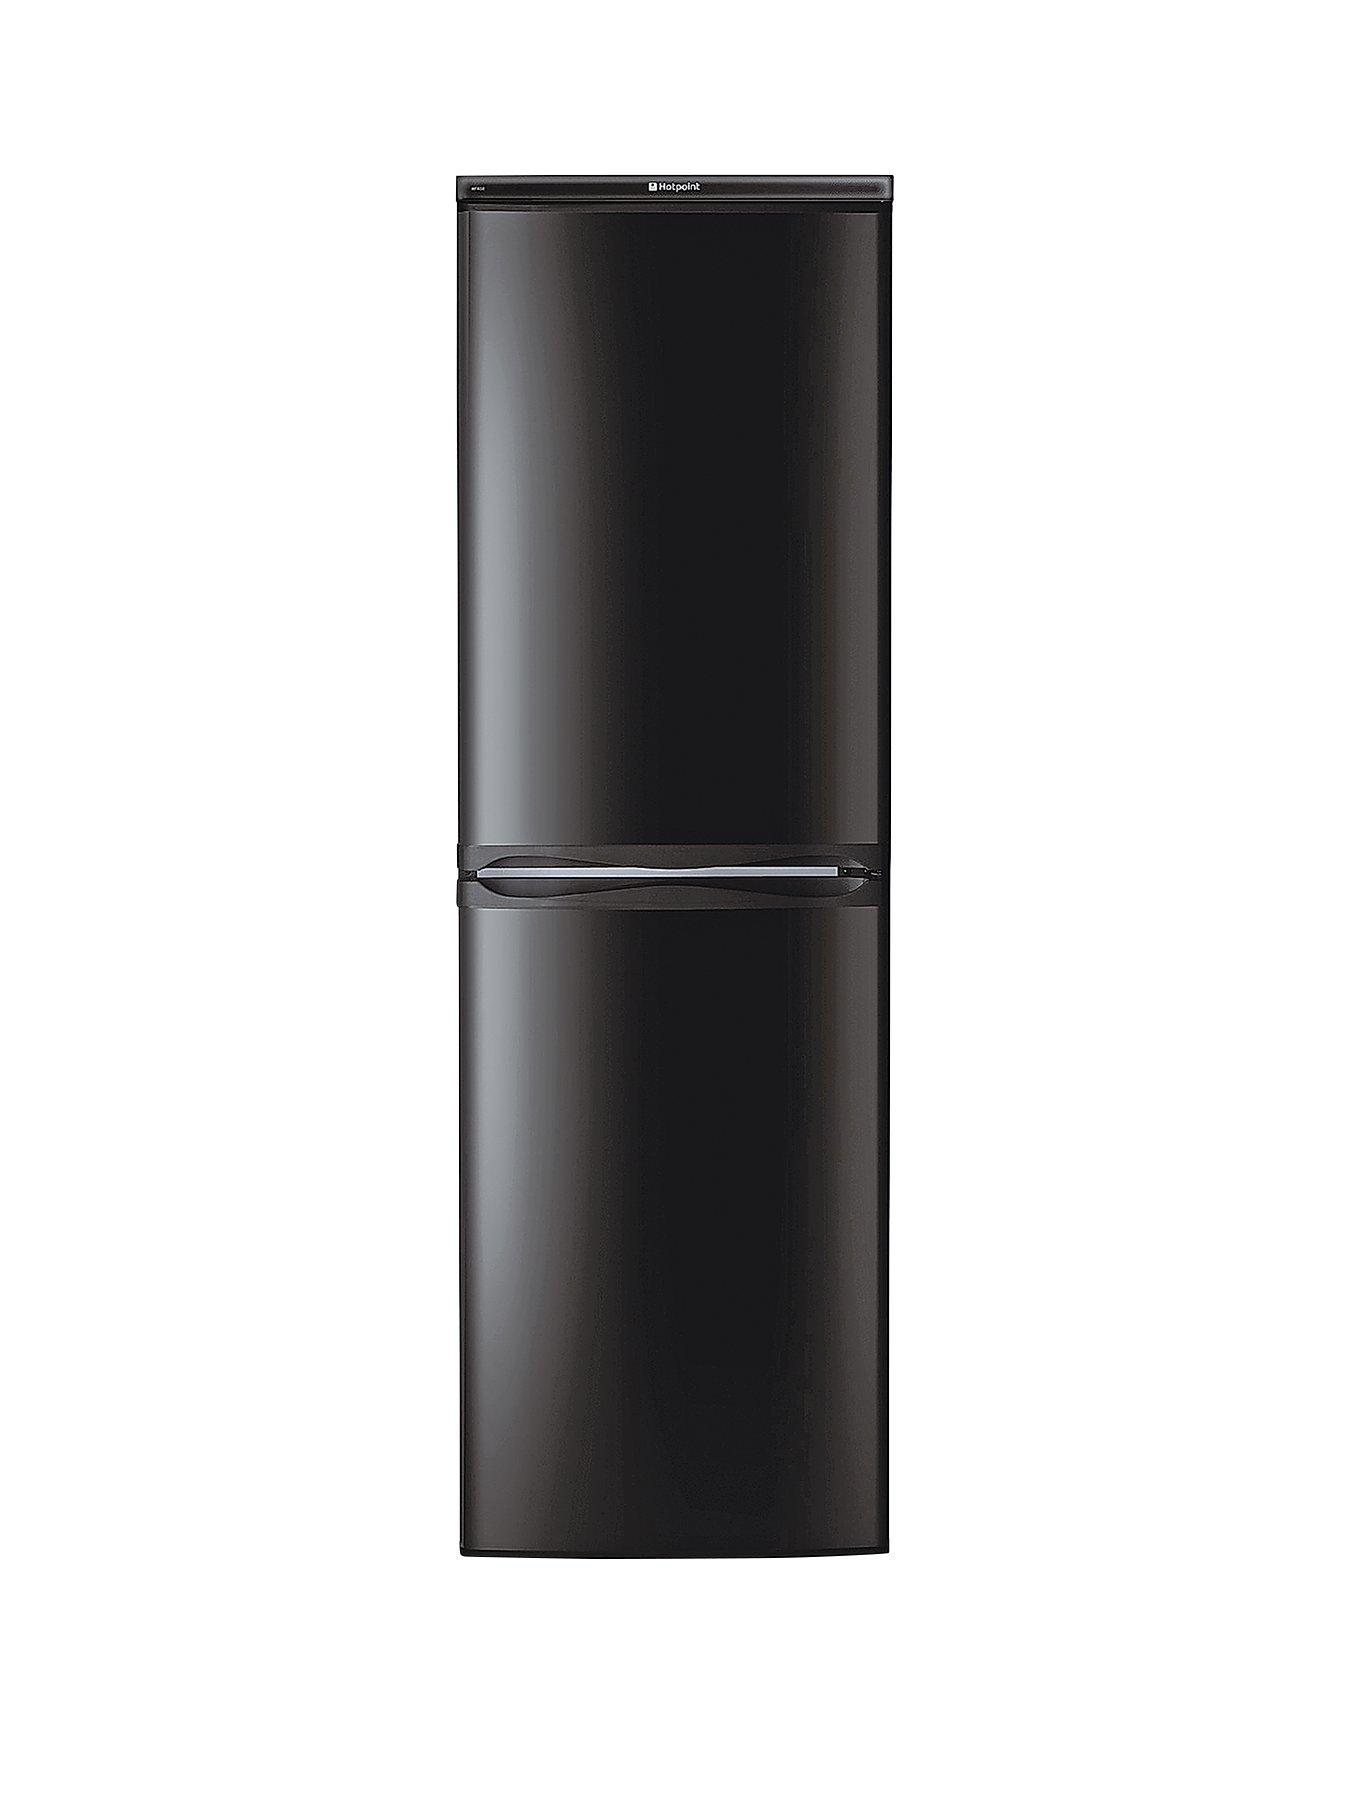 Hotpoint First Edition Hbd5517B 50/50 Fridge Freezer A+ Energy Rating – Black